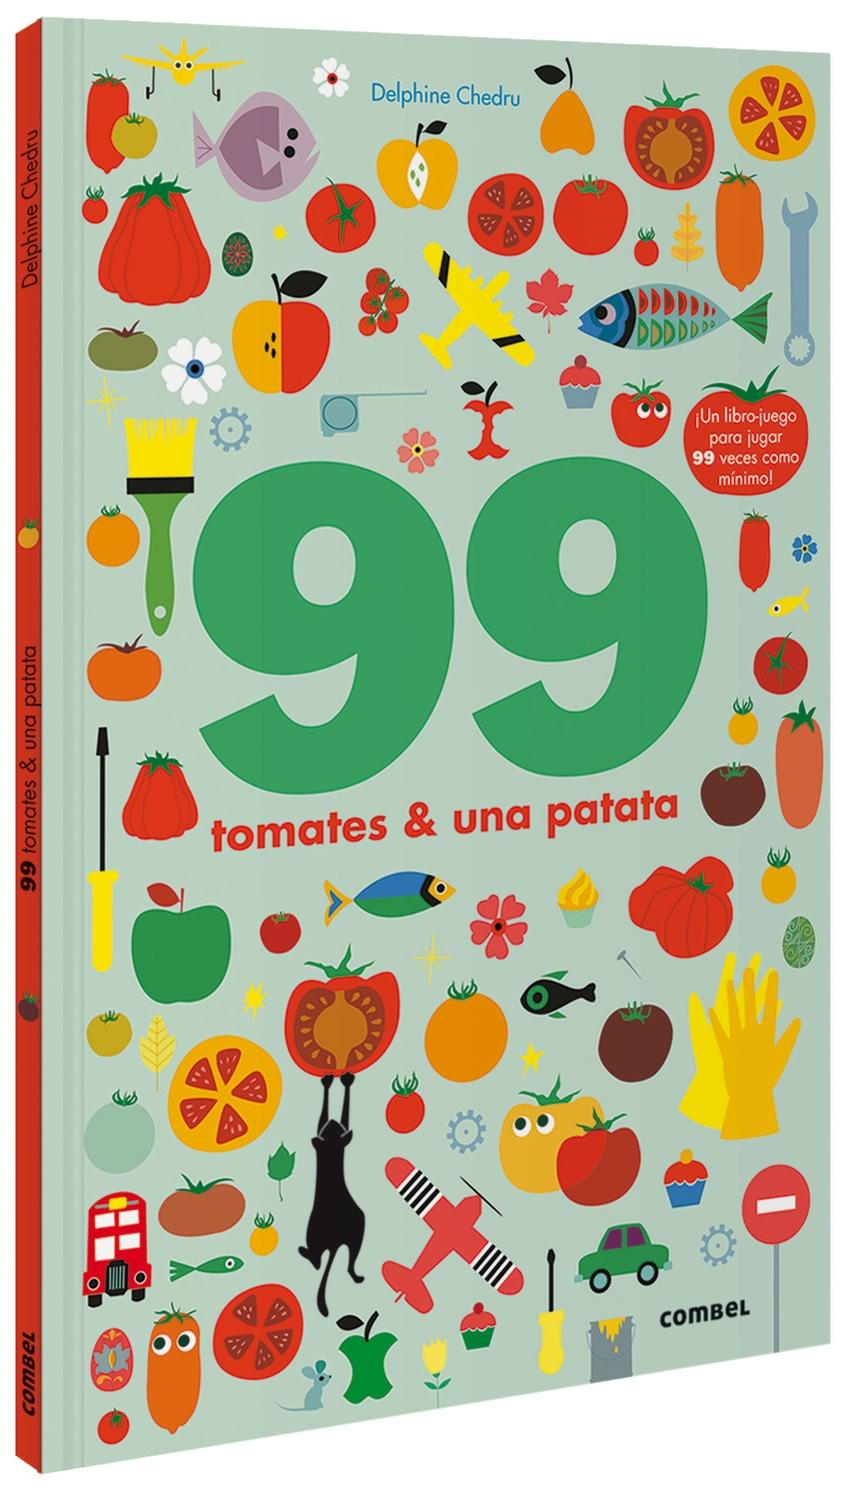 99 tomates y una patata